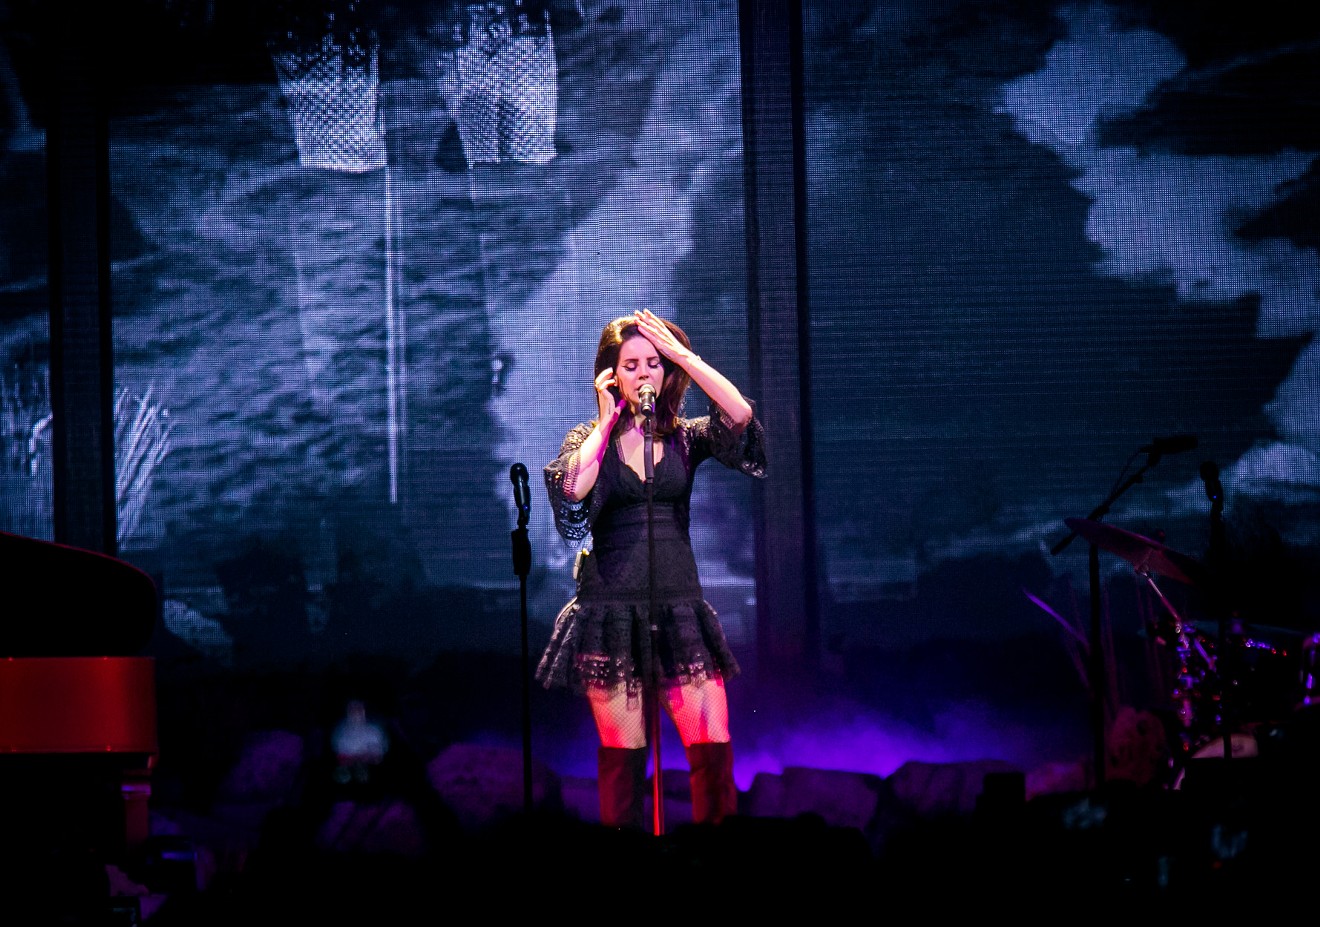 Lana Del Rey performed at Talking Stick Resort Arena on February 13.